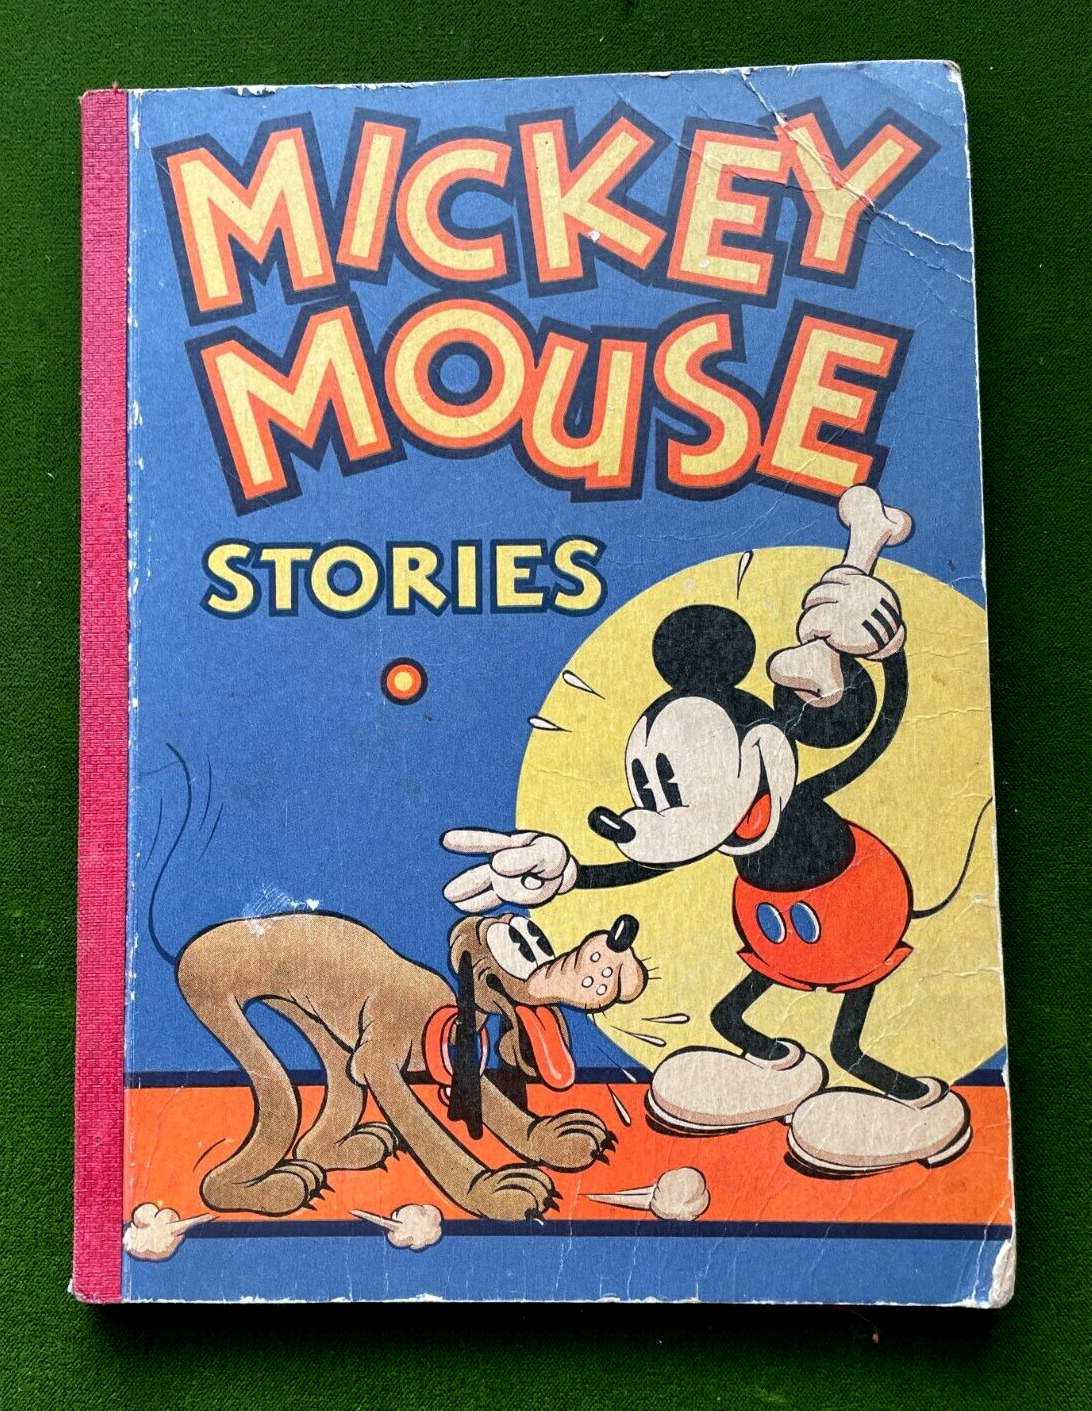 Mickey Mouse Stories Book No. 2, Walt Disney Studios, David McKay Co. 1934